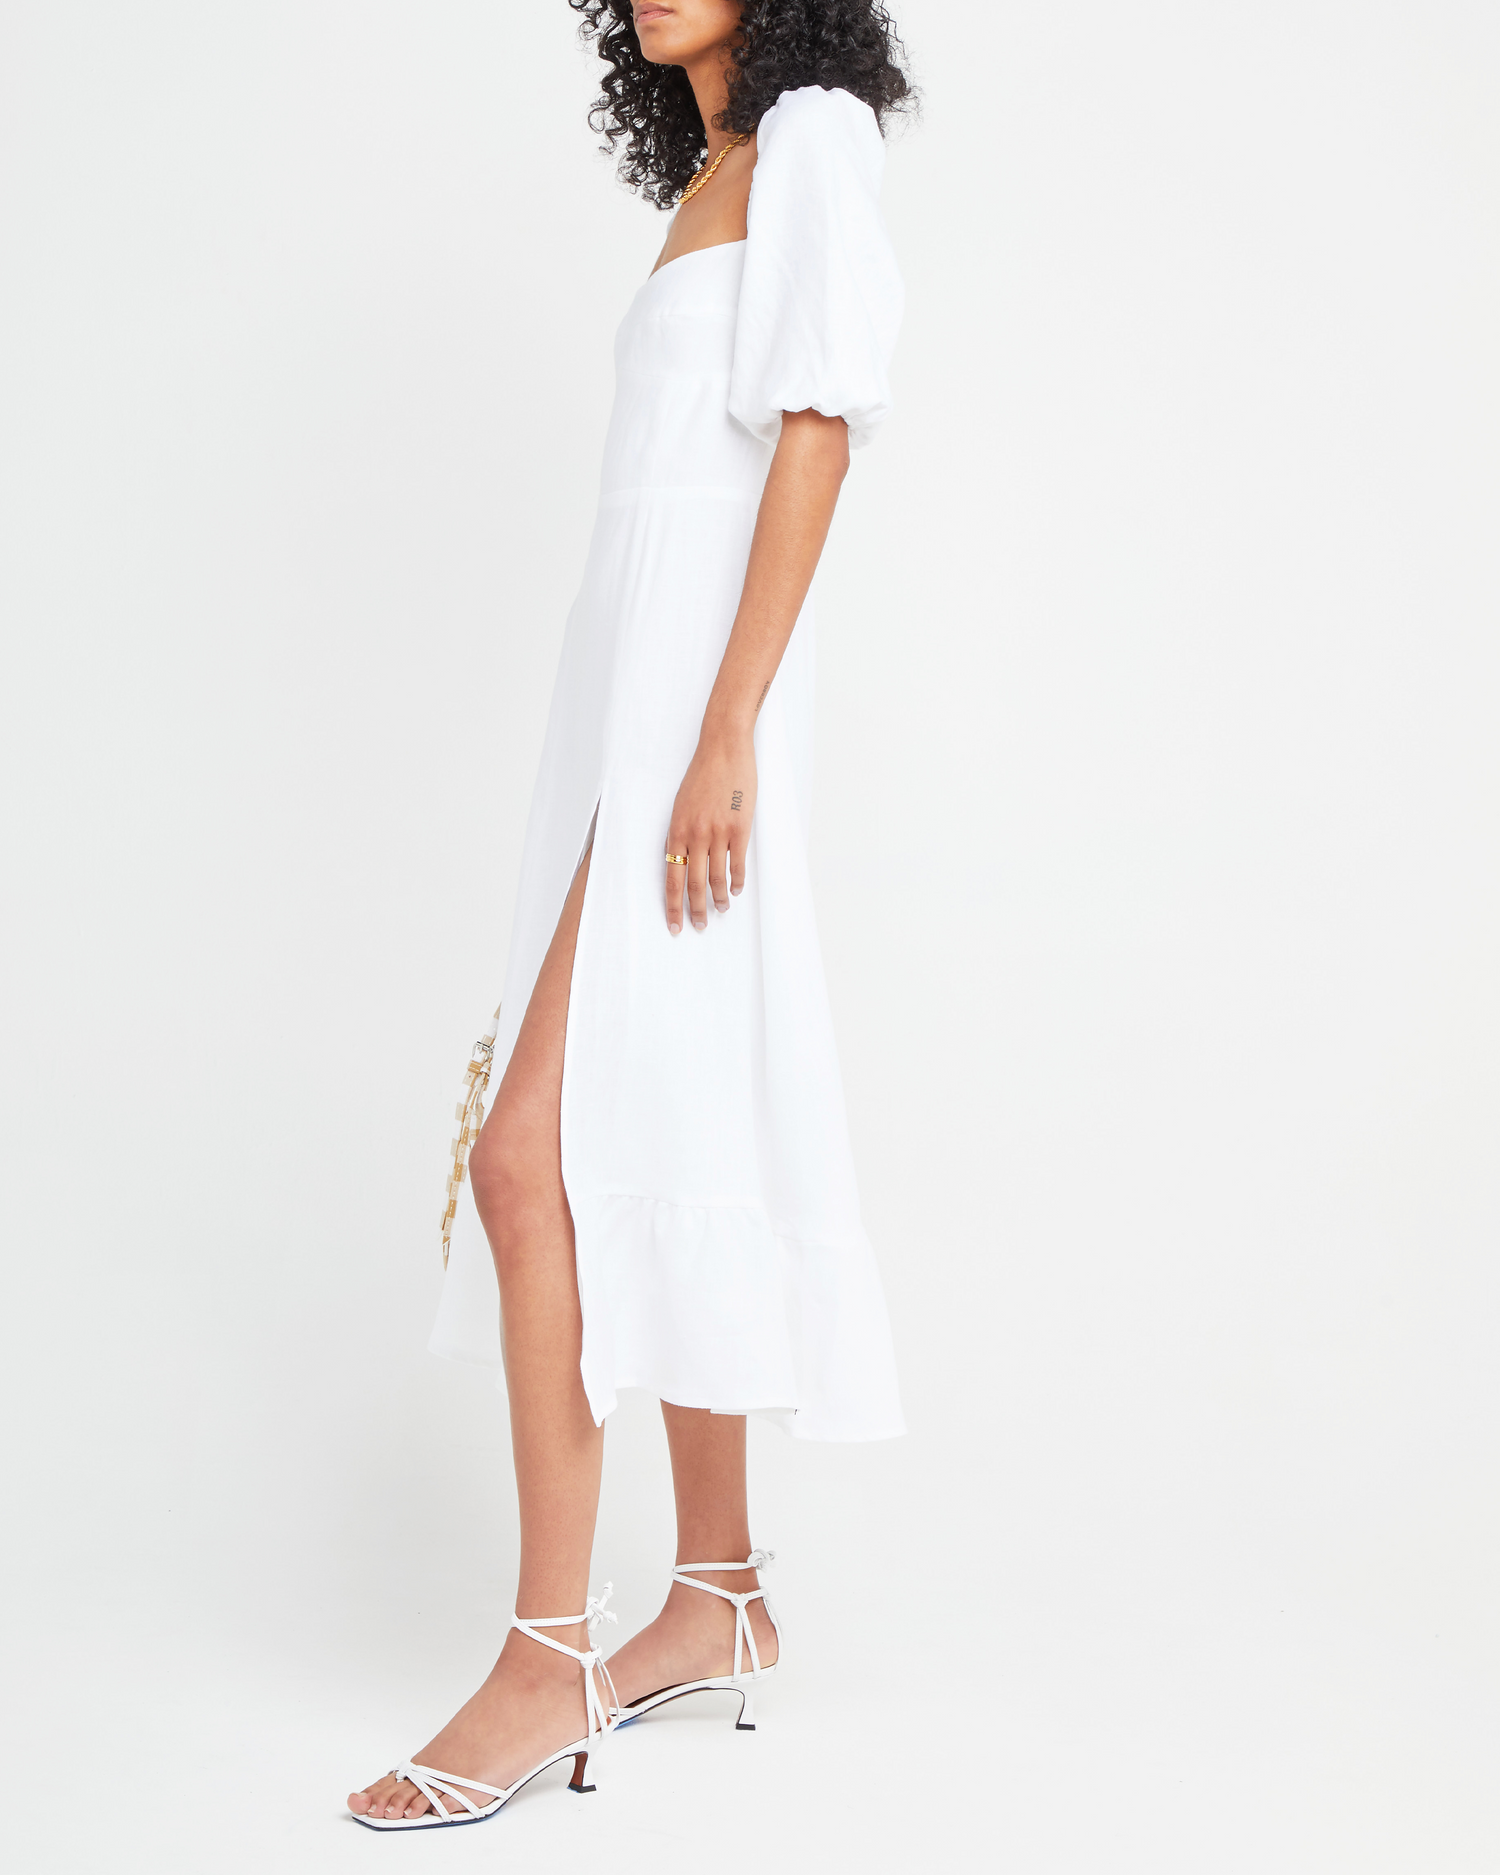 Fourth image of Violetta Midi Dress, a white midi dress, sweetheart neckline, short sleeves, puff sleeves, side slit